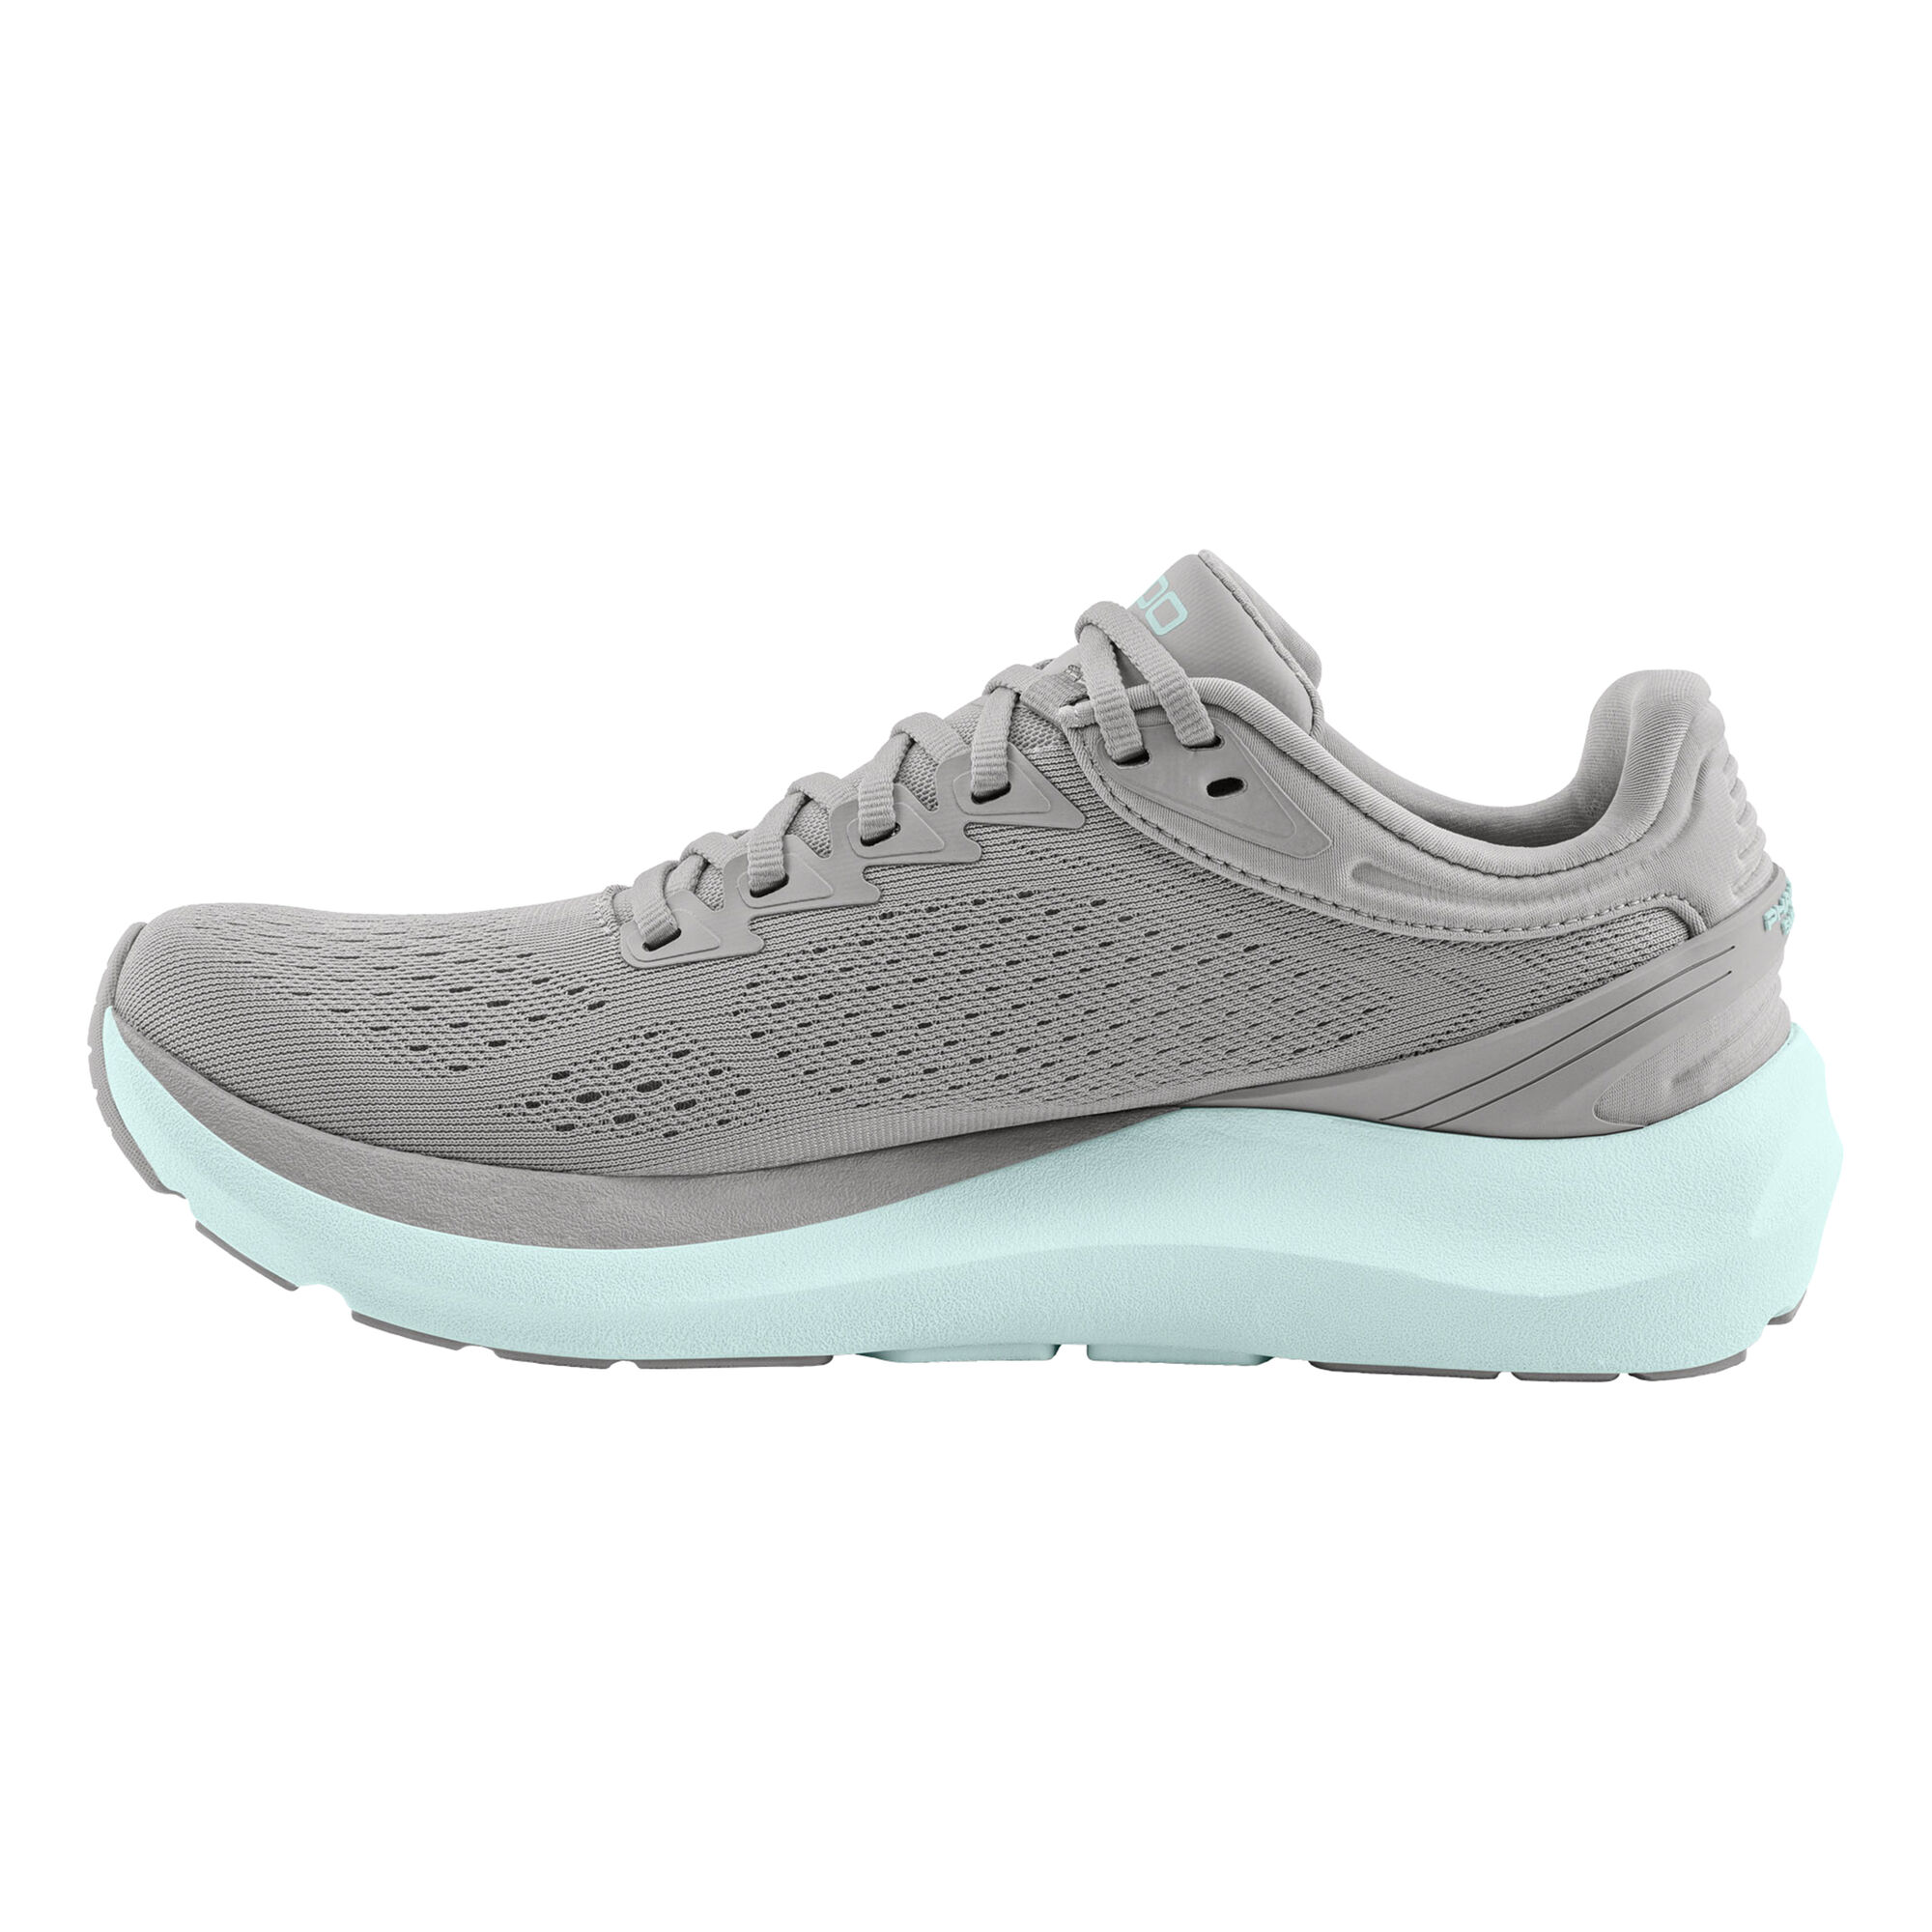 Buy TOPO ATHLETIC Phantom 3 Neutral Running Shoe Women Grey online